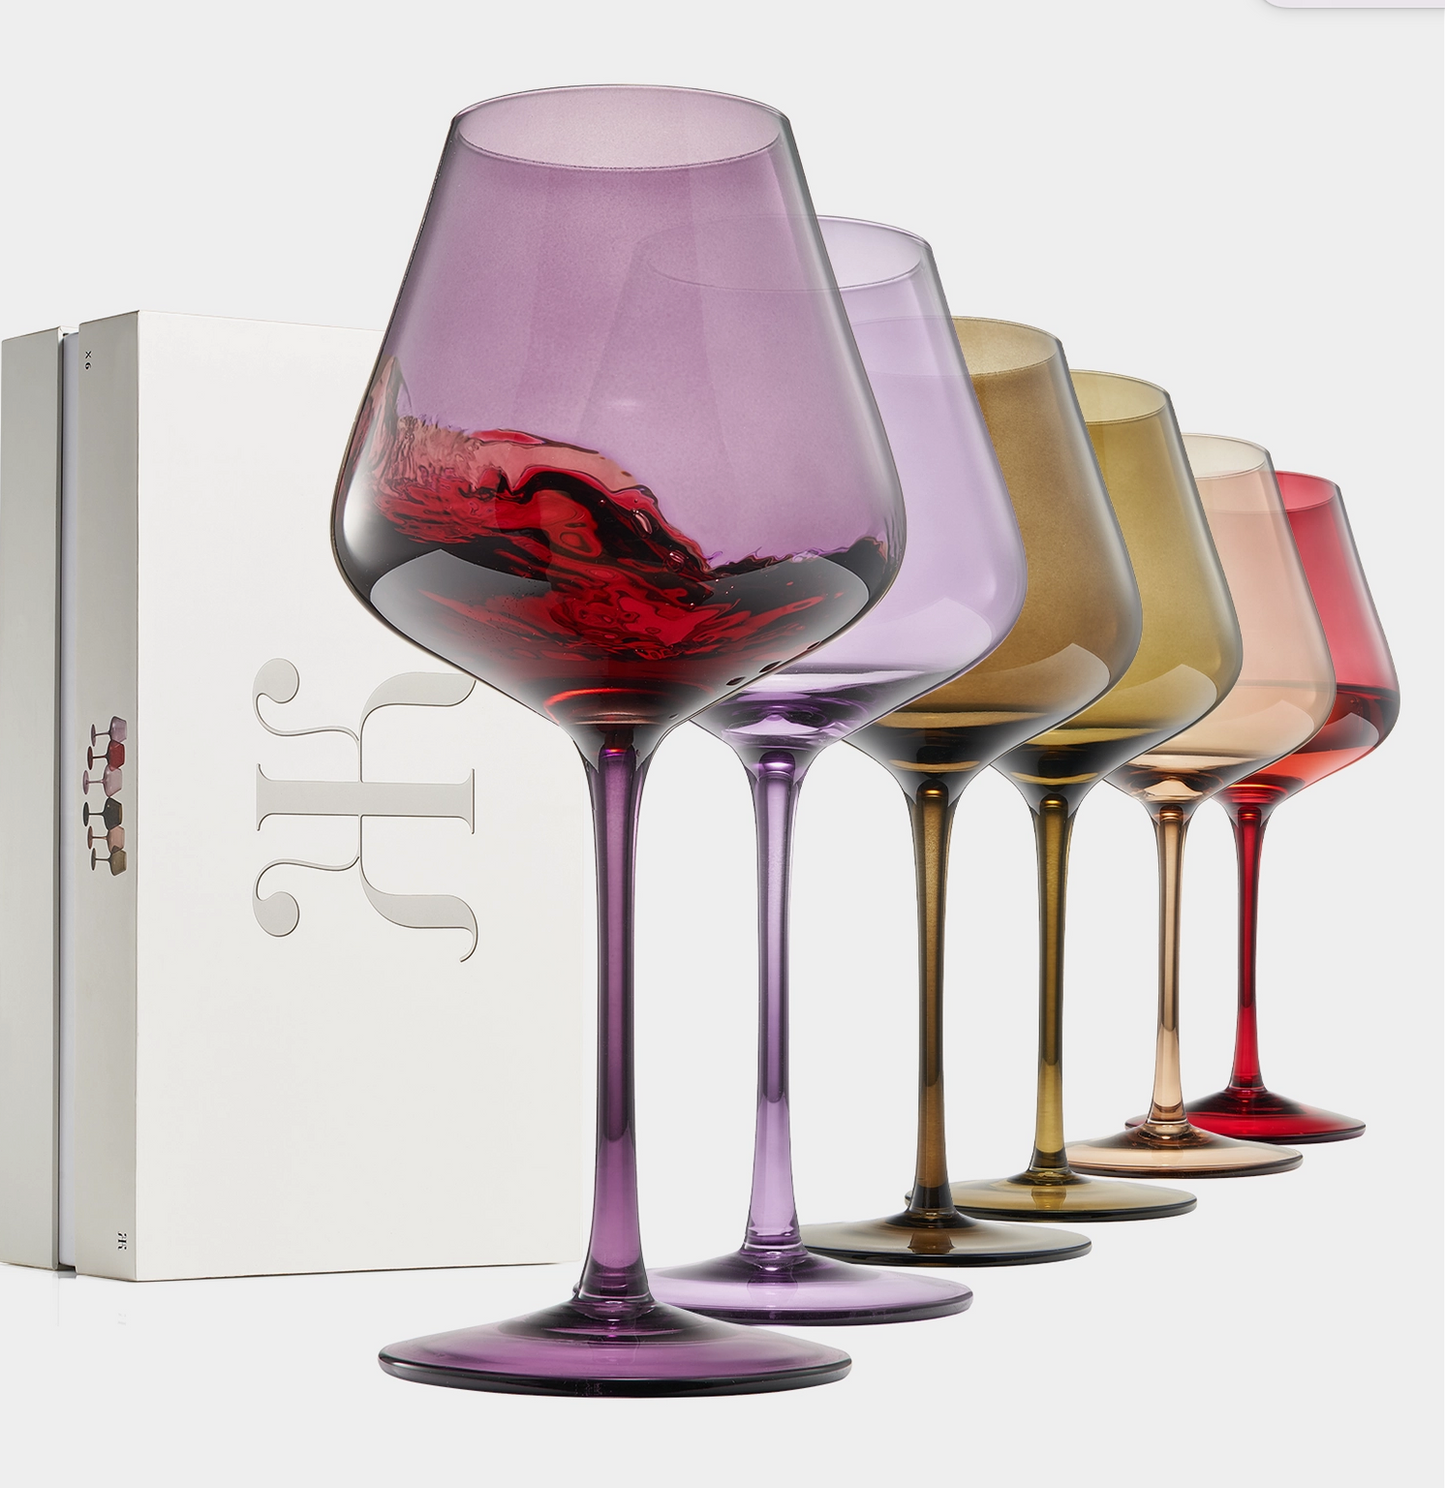 Set of 6 20 oz Colored Crystal Wine Glasses